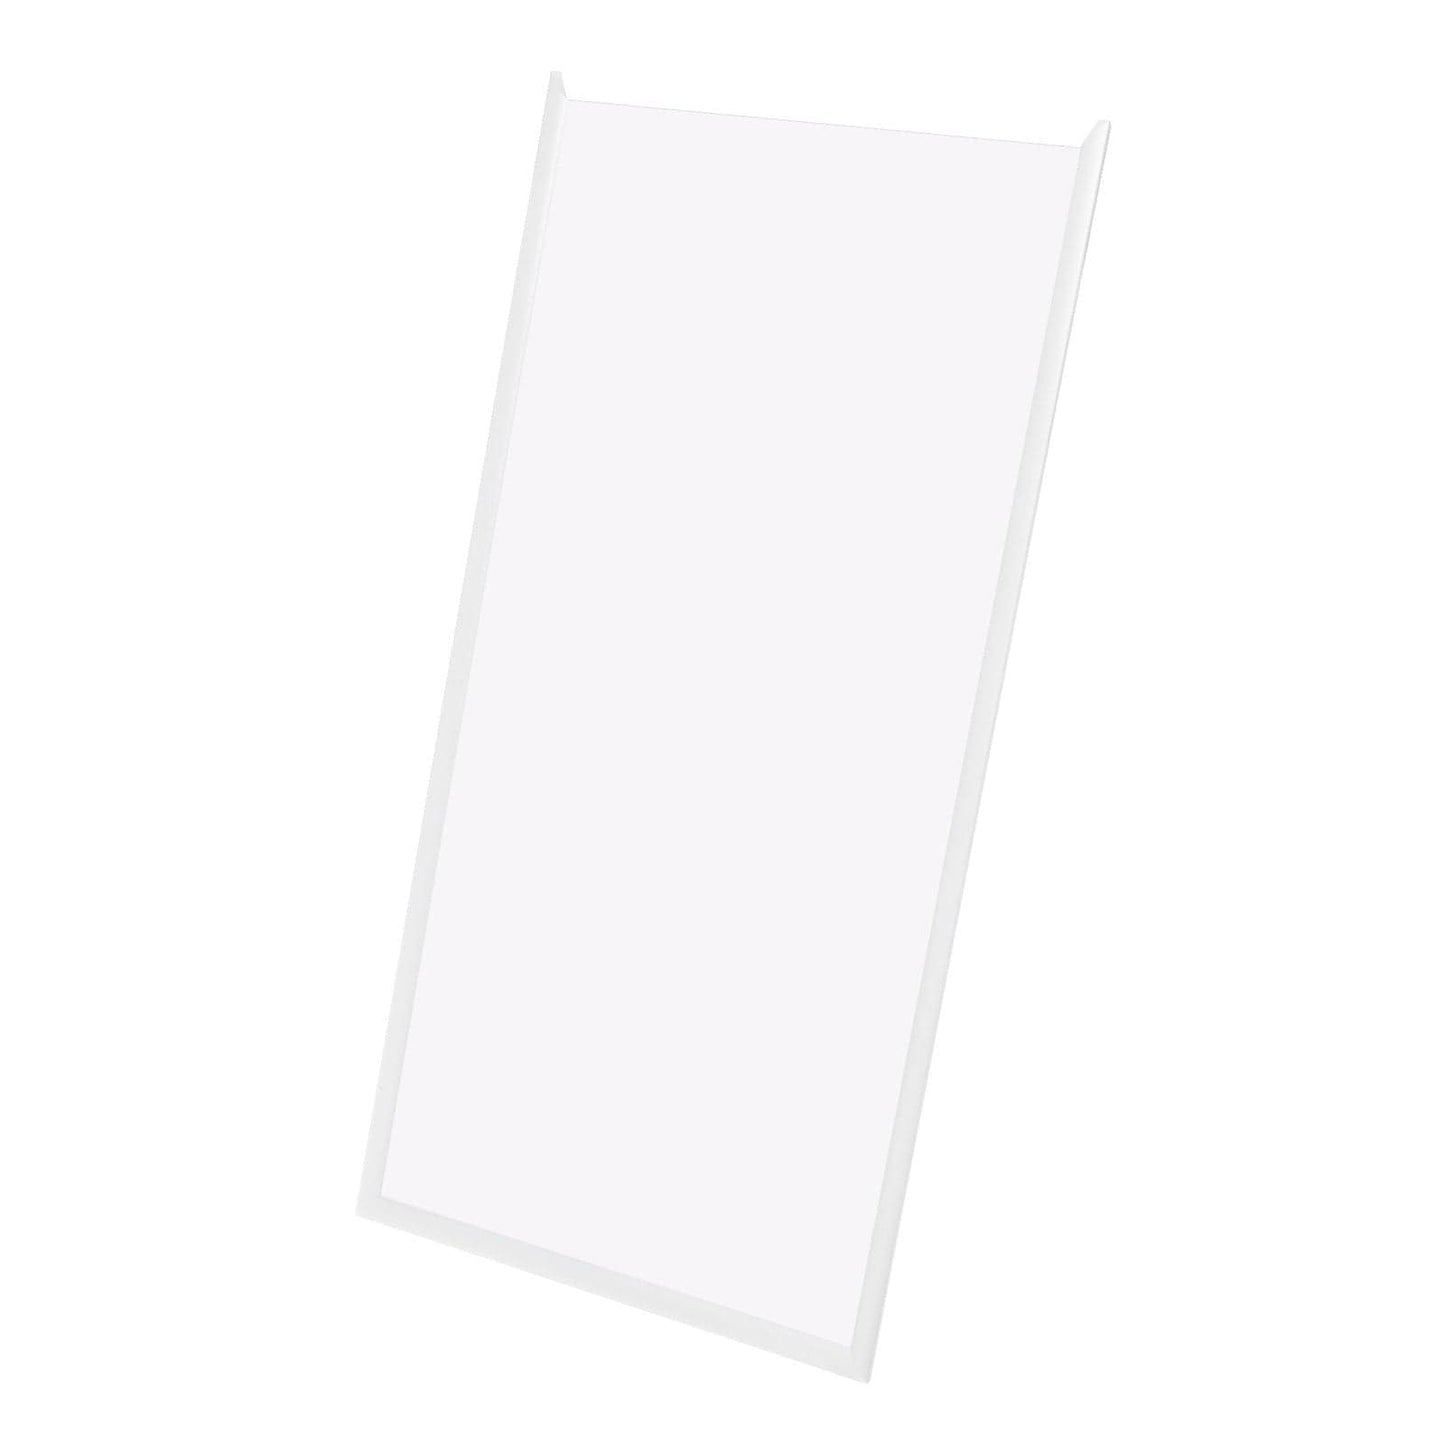 10x24 White SnapeZo® Snap Frame - 1.2" Profile - Snap Frames Direct